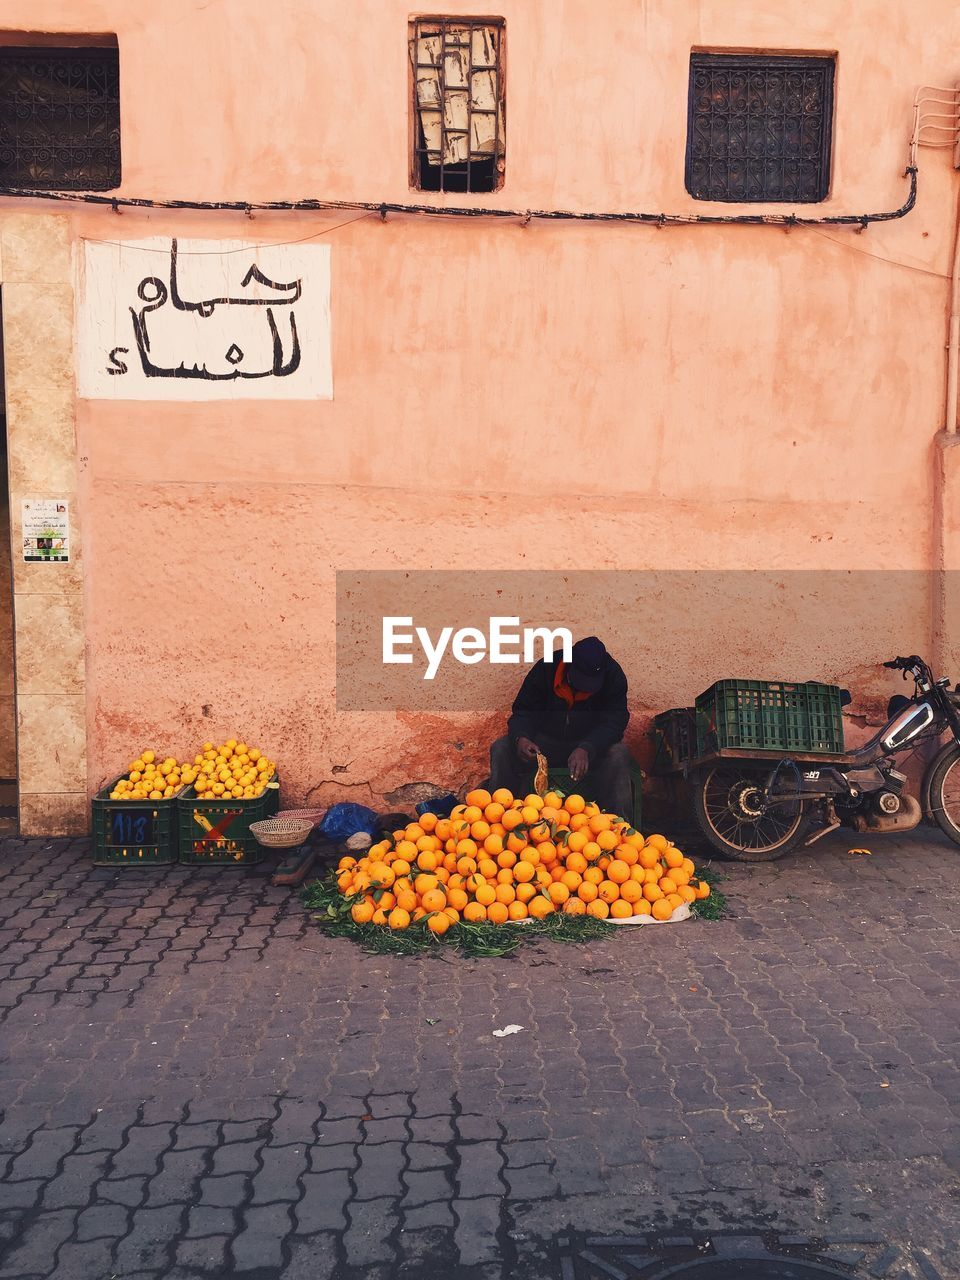 Man selling oranges in street market